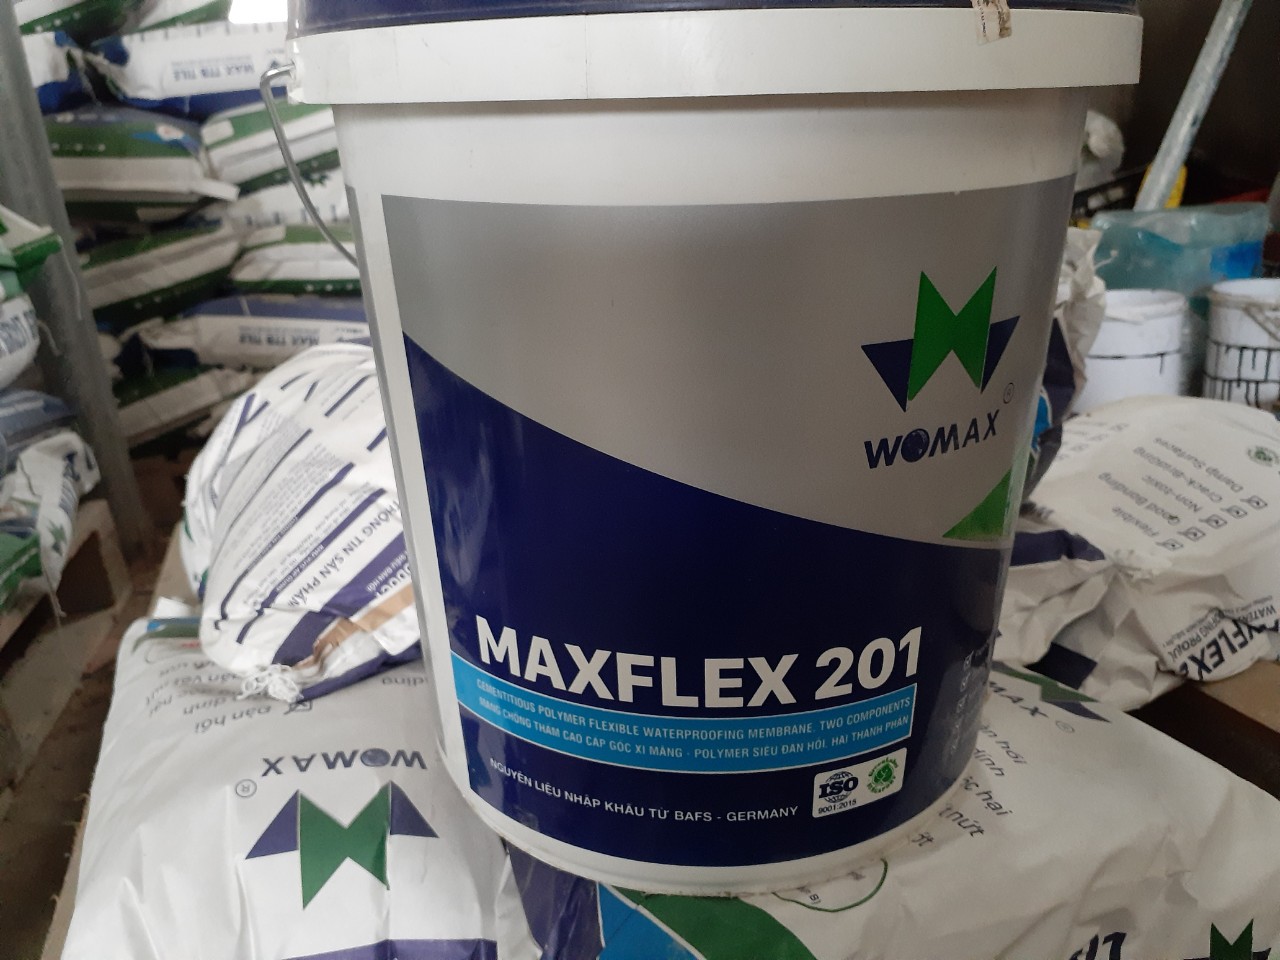 Maxflex-201-namtienphong.jpg